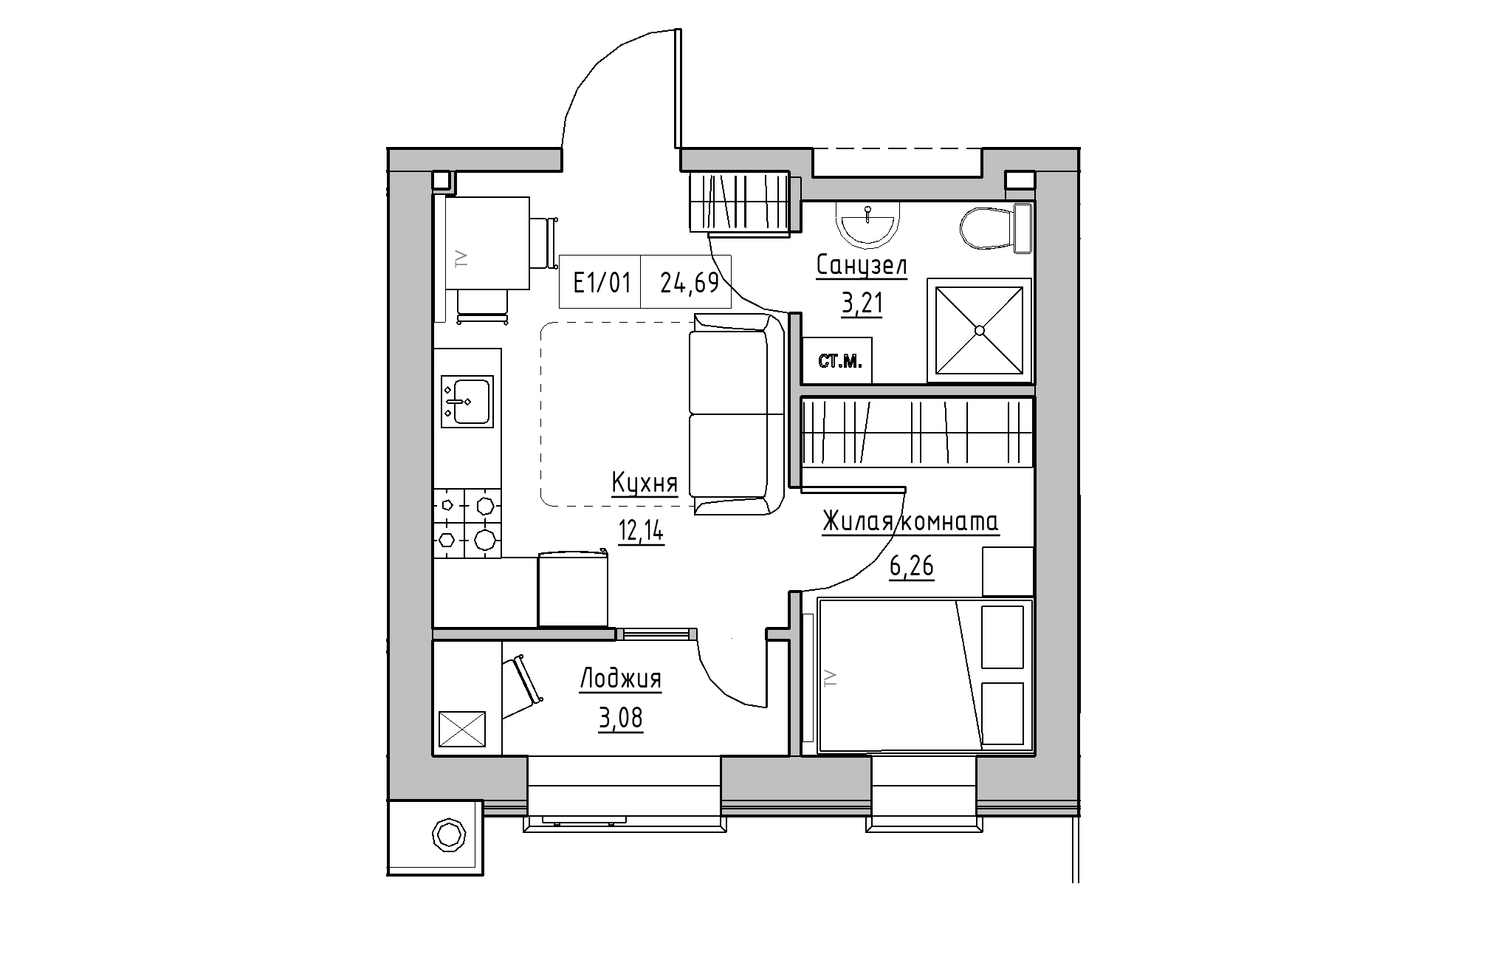 Planning 1-rm flats area 24.69m2, KS-013-05/0015.